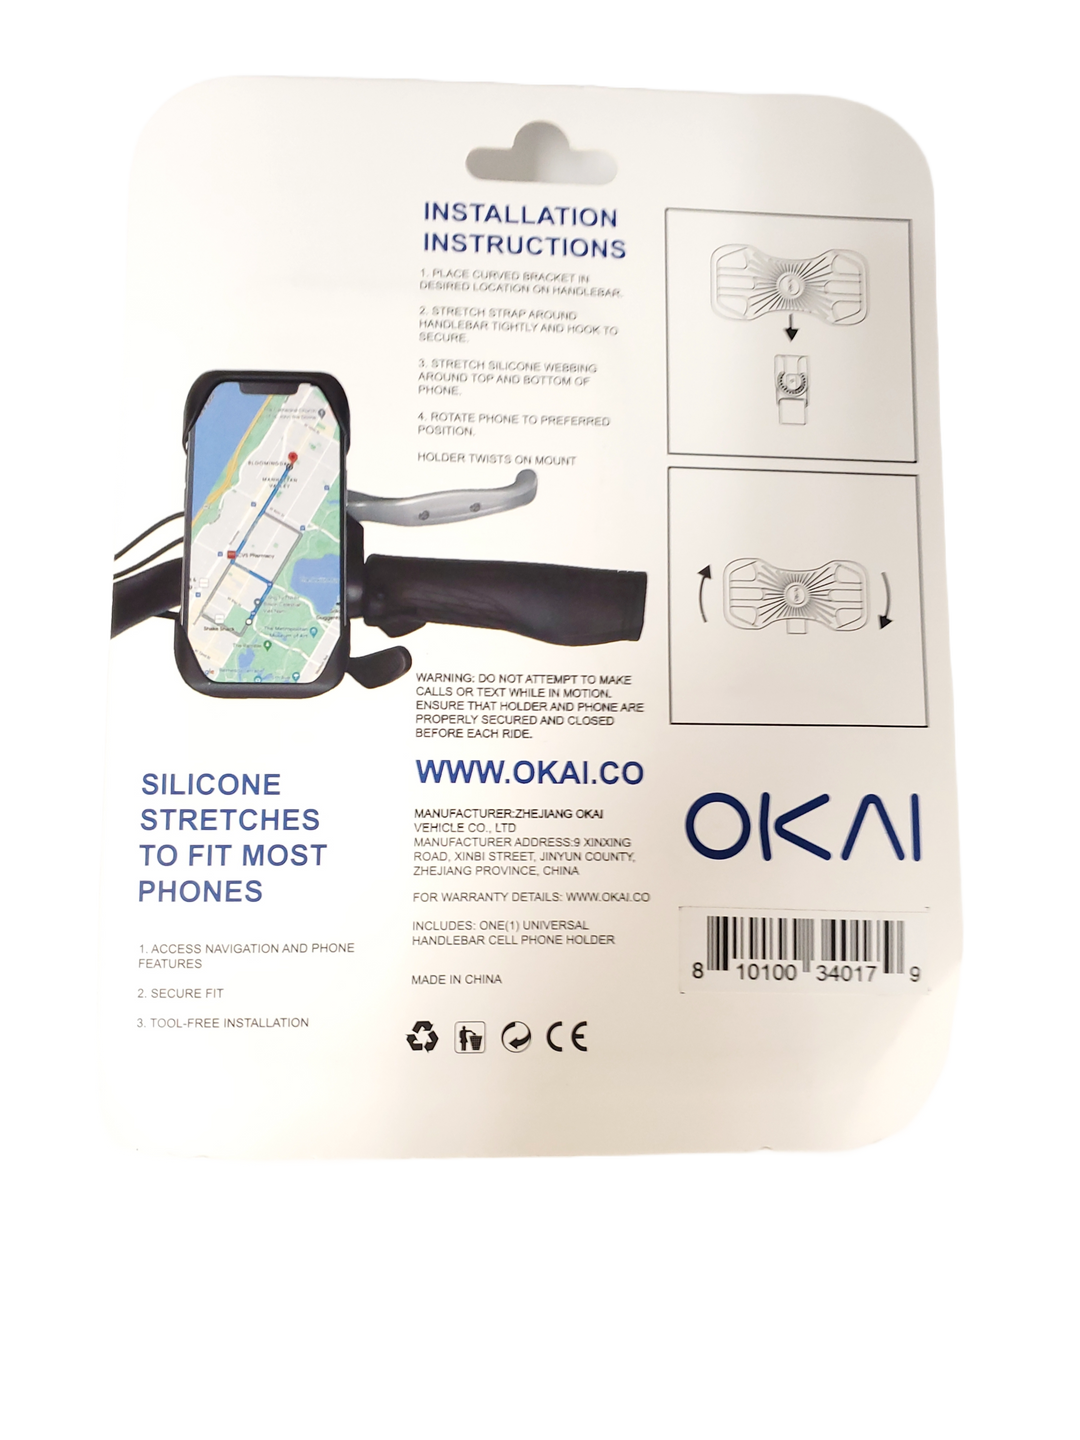 OKAI Phone Holder